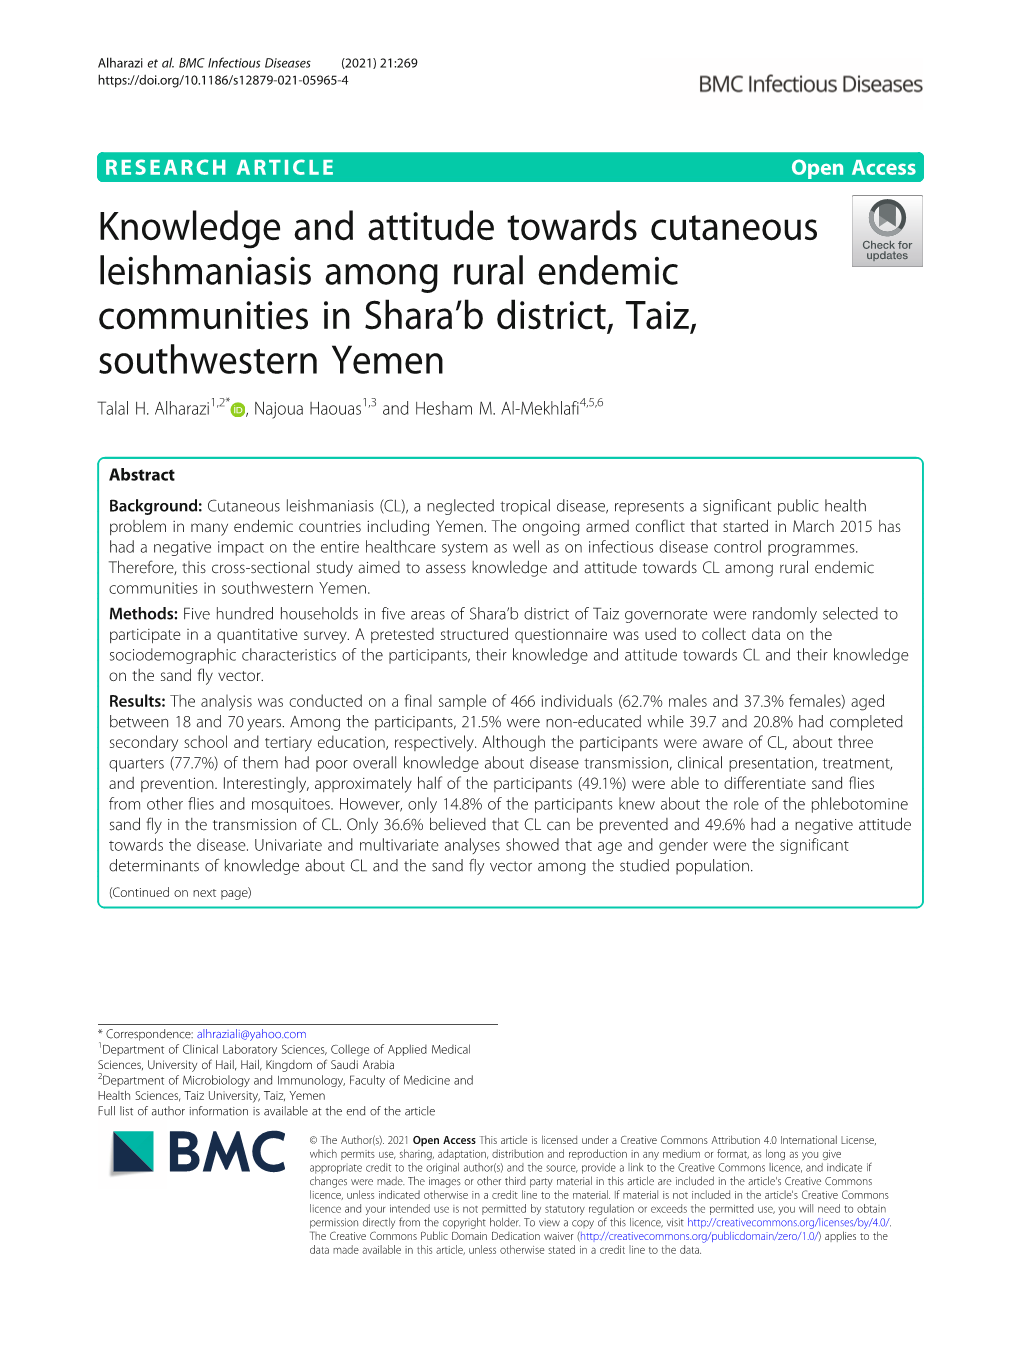 Knowledge and Attitude Towards Cutaneous Leishmaniasis Among Rural Endemic Communities in Shara’B District, Taiz, Southwestern Yemen Talal H